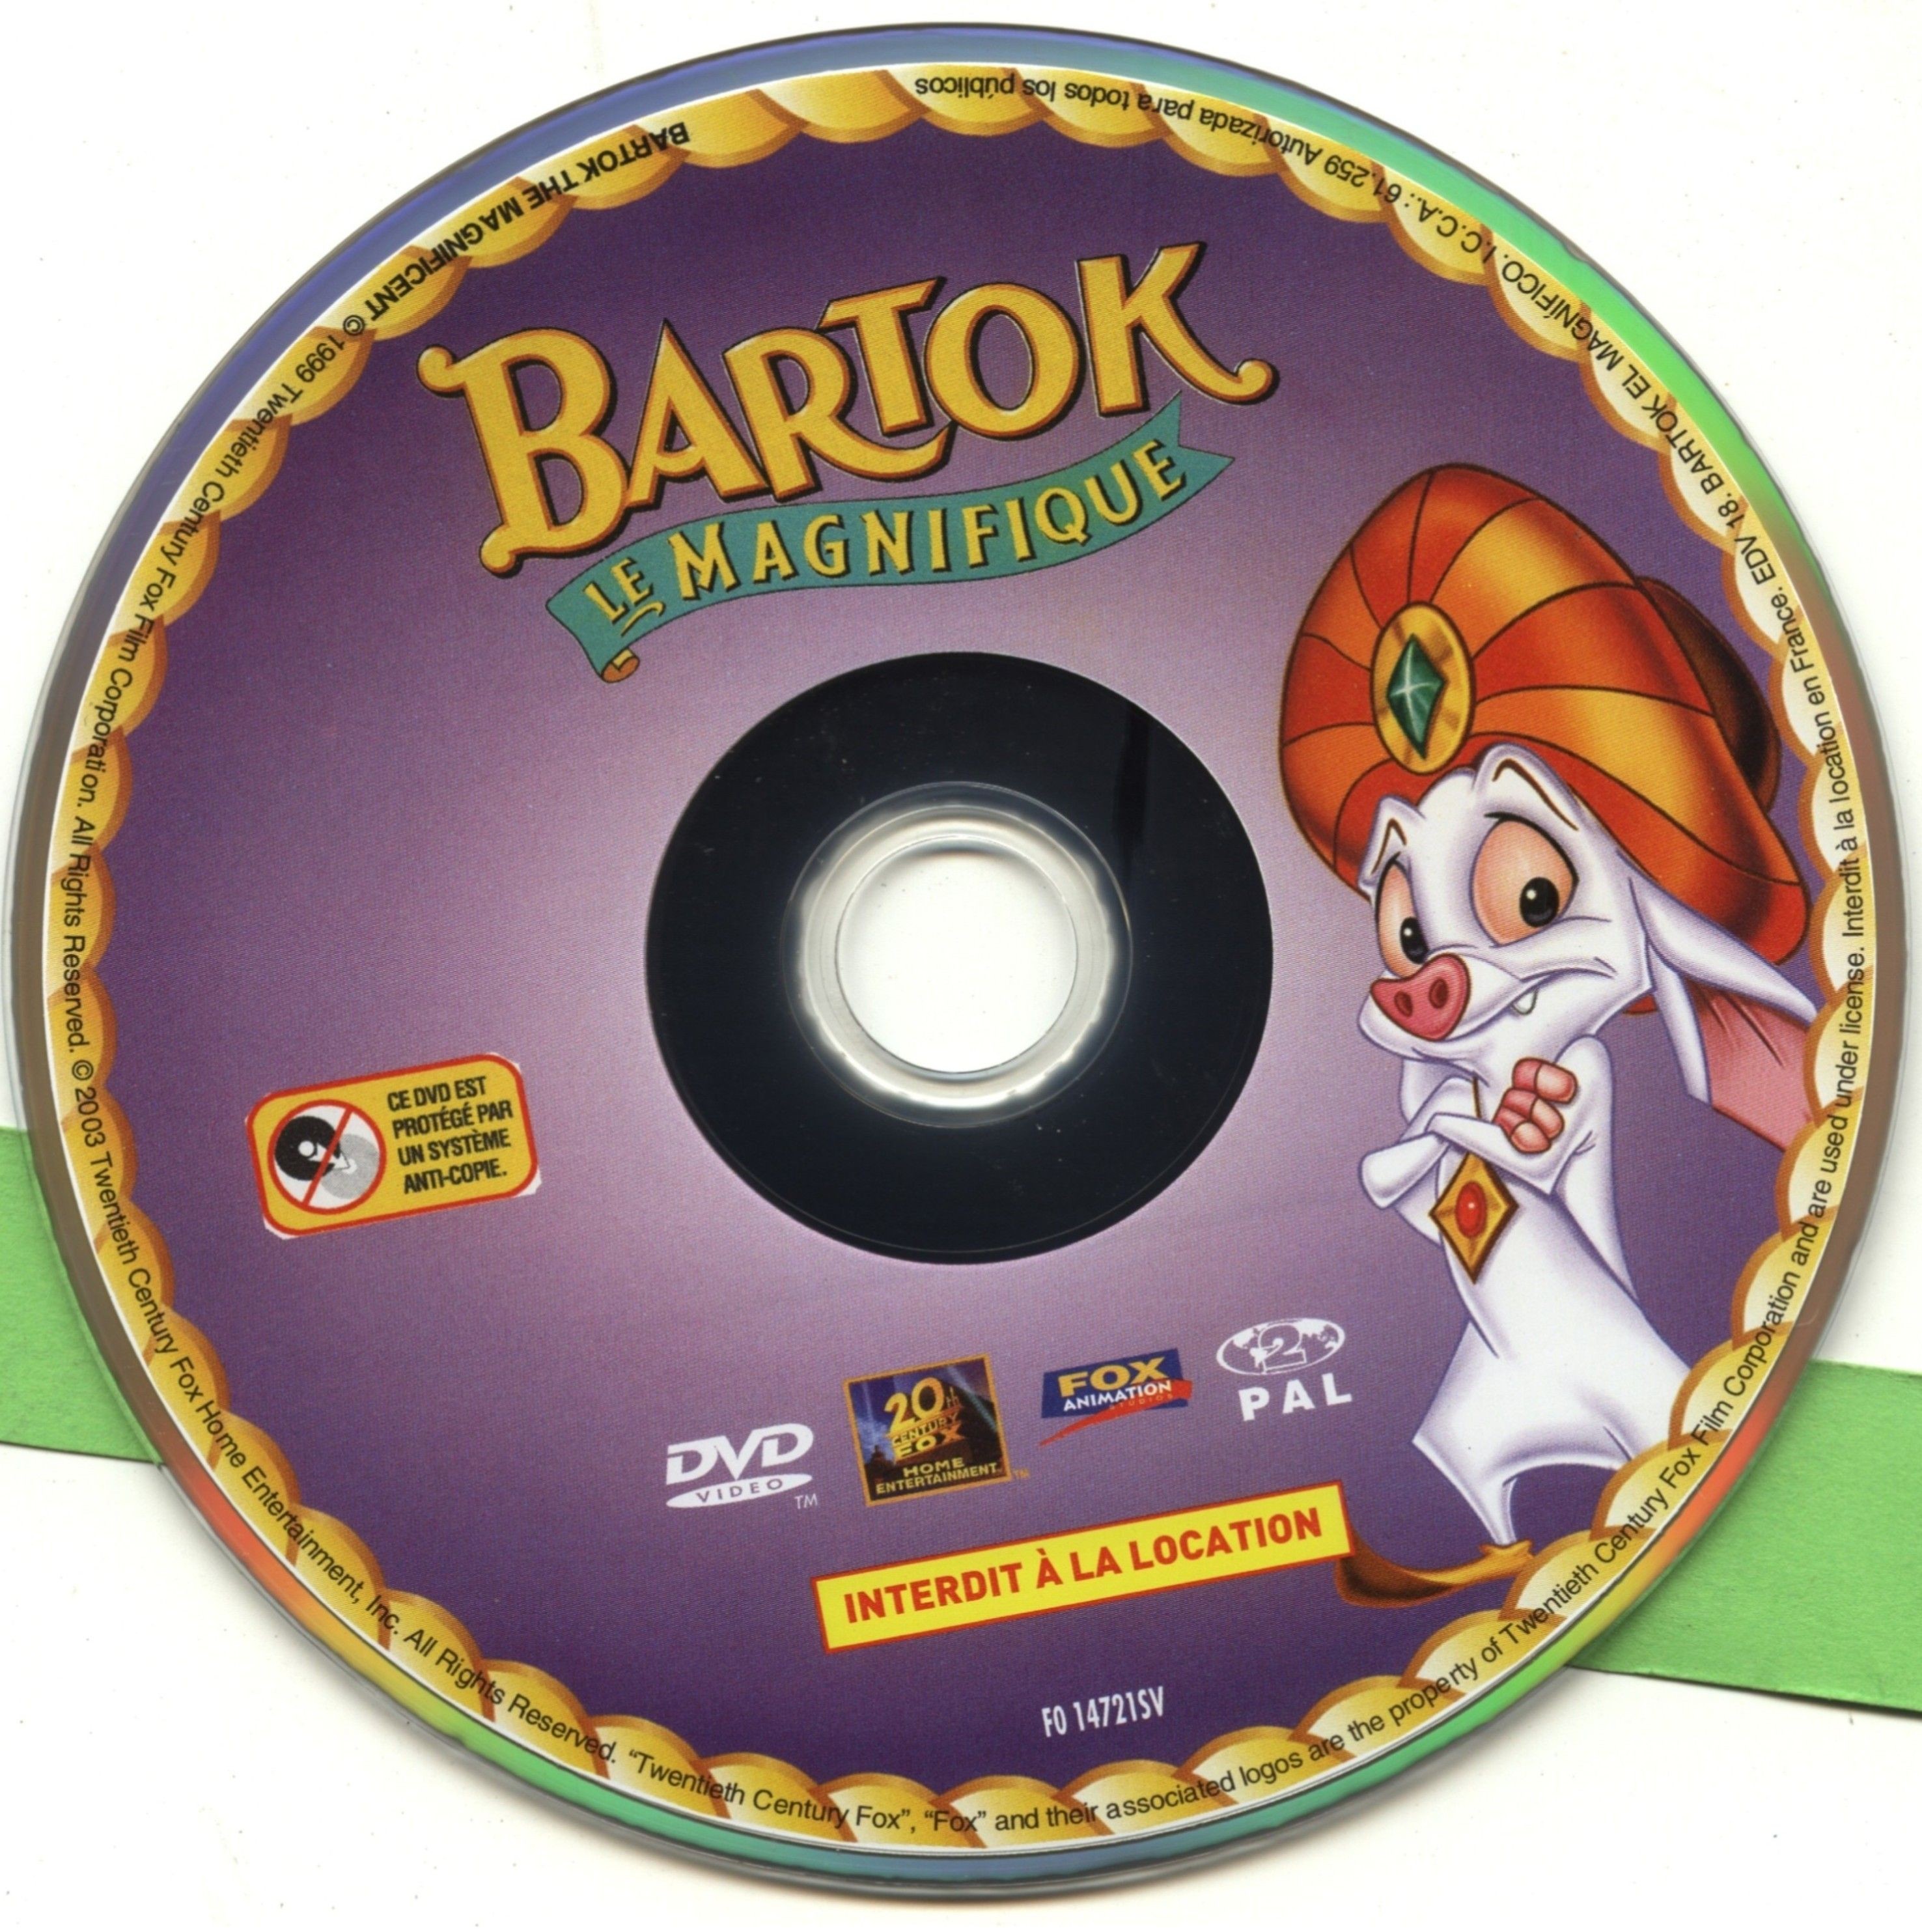 Bartok le magnifique